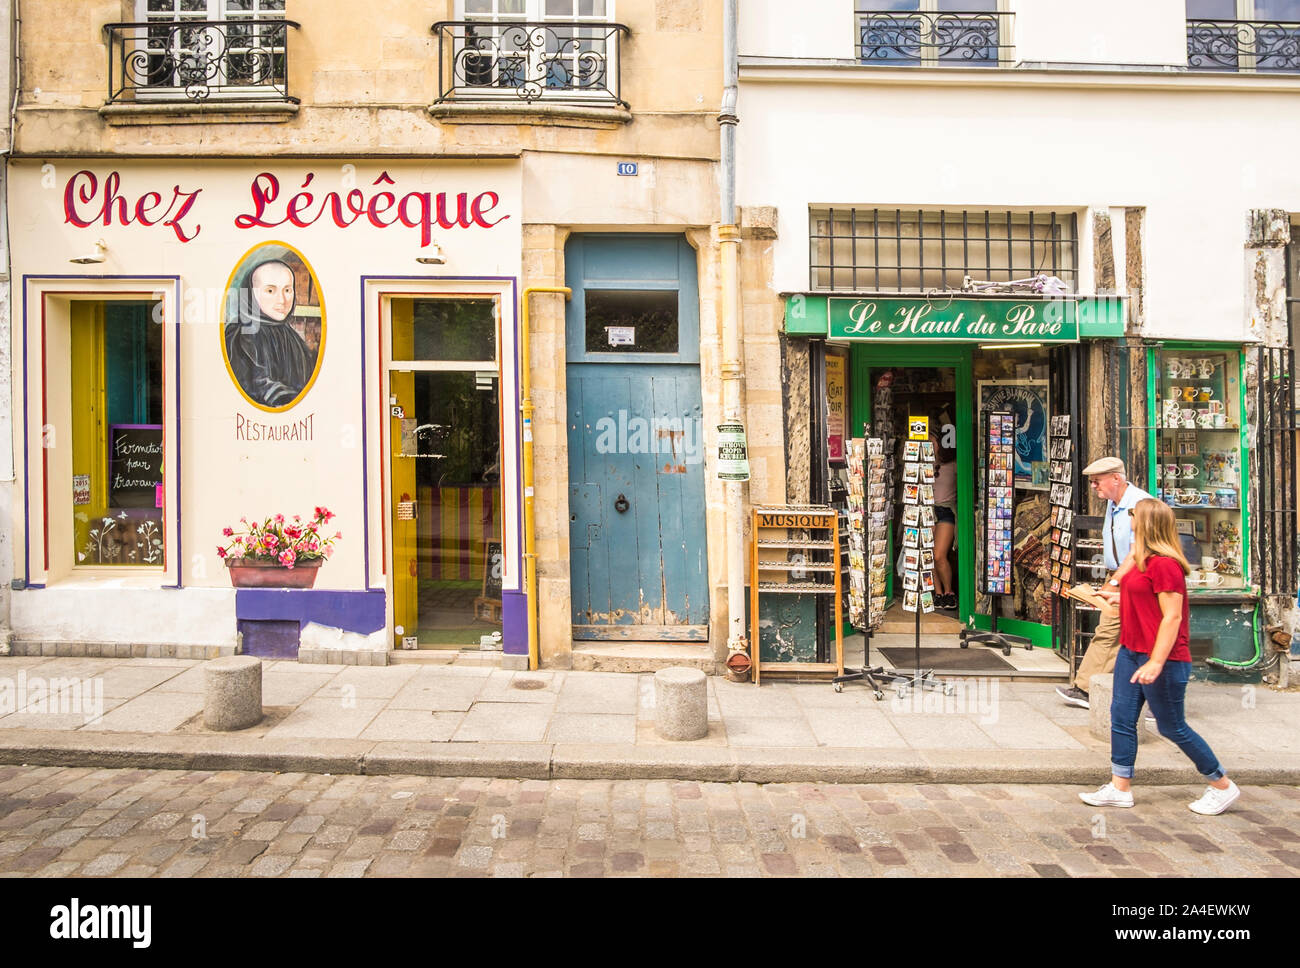 street scene in front of 'chez leveque' restaurant and 'le haut du pavé' gift shop, Stock Photo